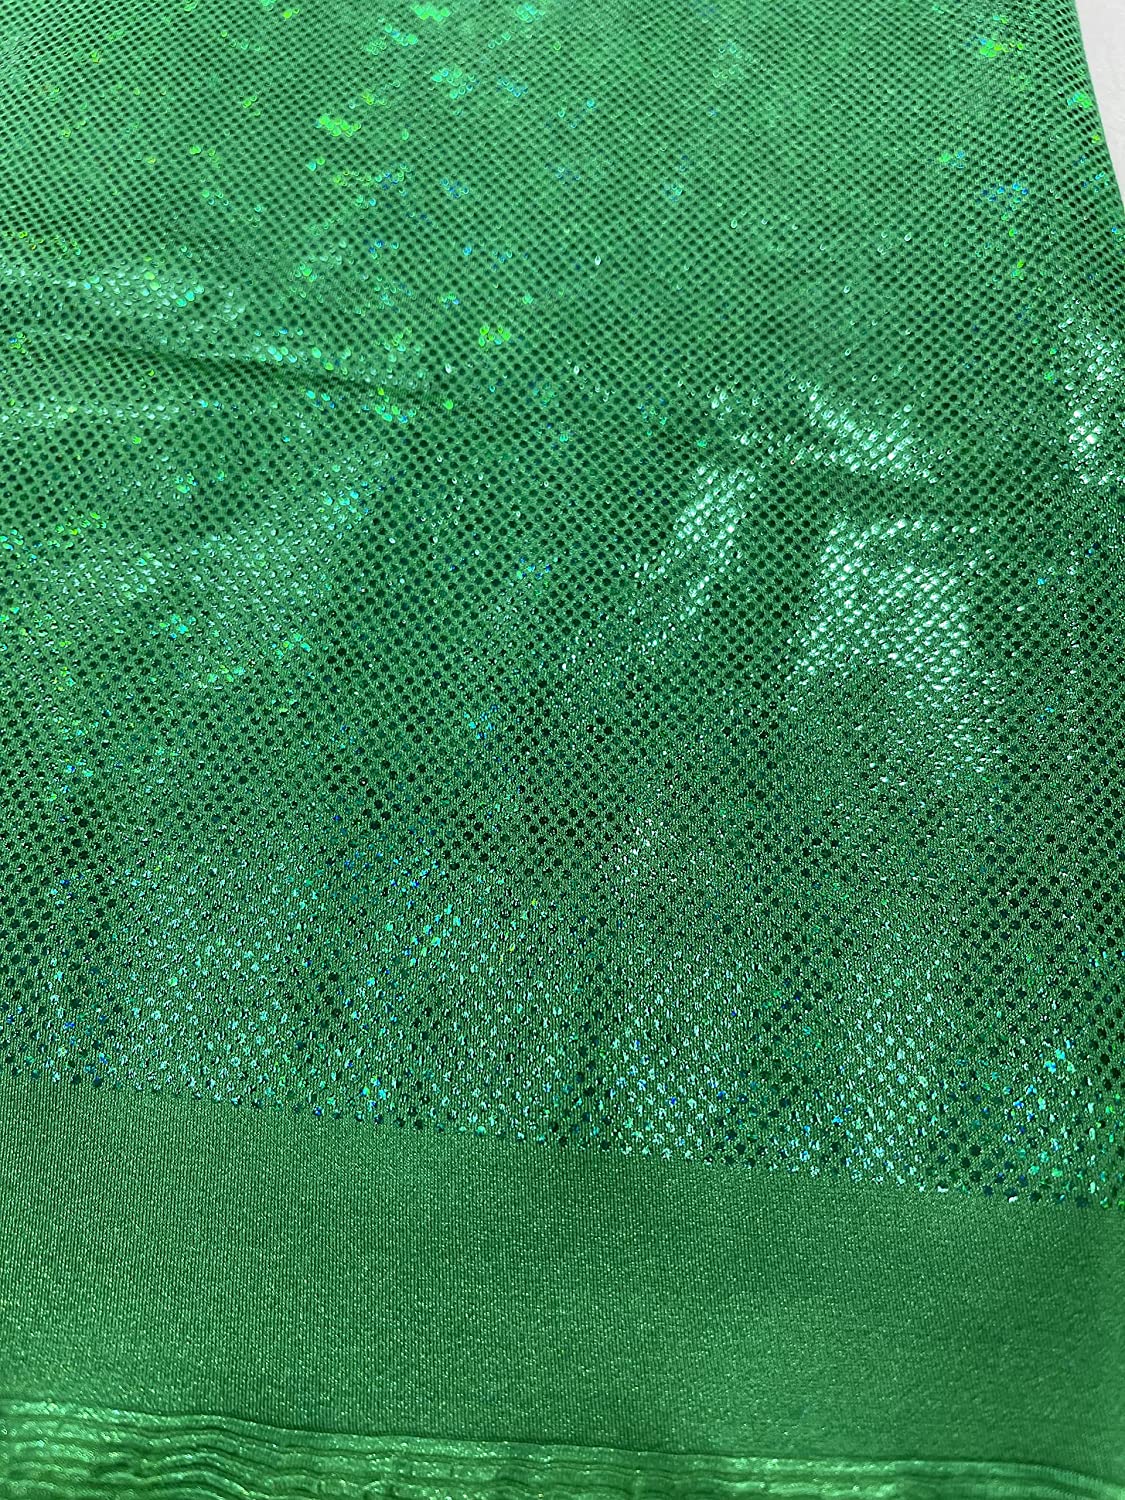 Shattered Glass Foil Iridescent Hologram Dancewear 4 Way Stretch Spandex Nylon Tricot Fabric (1 Yard, Emerald Green)